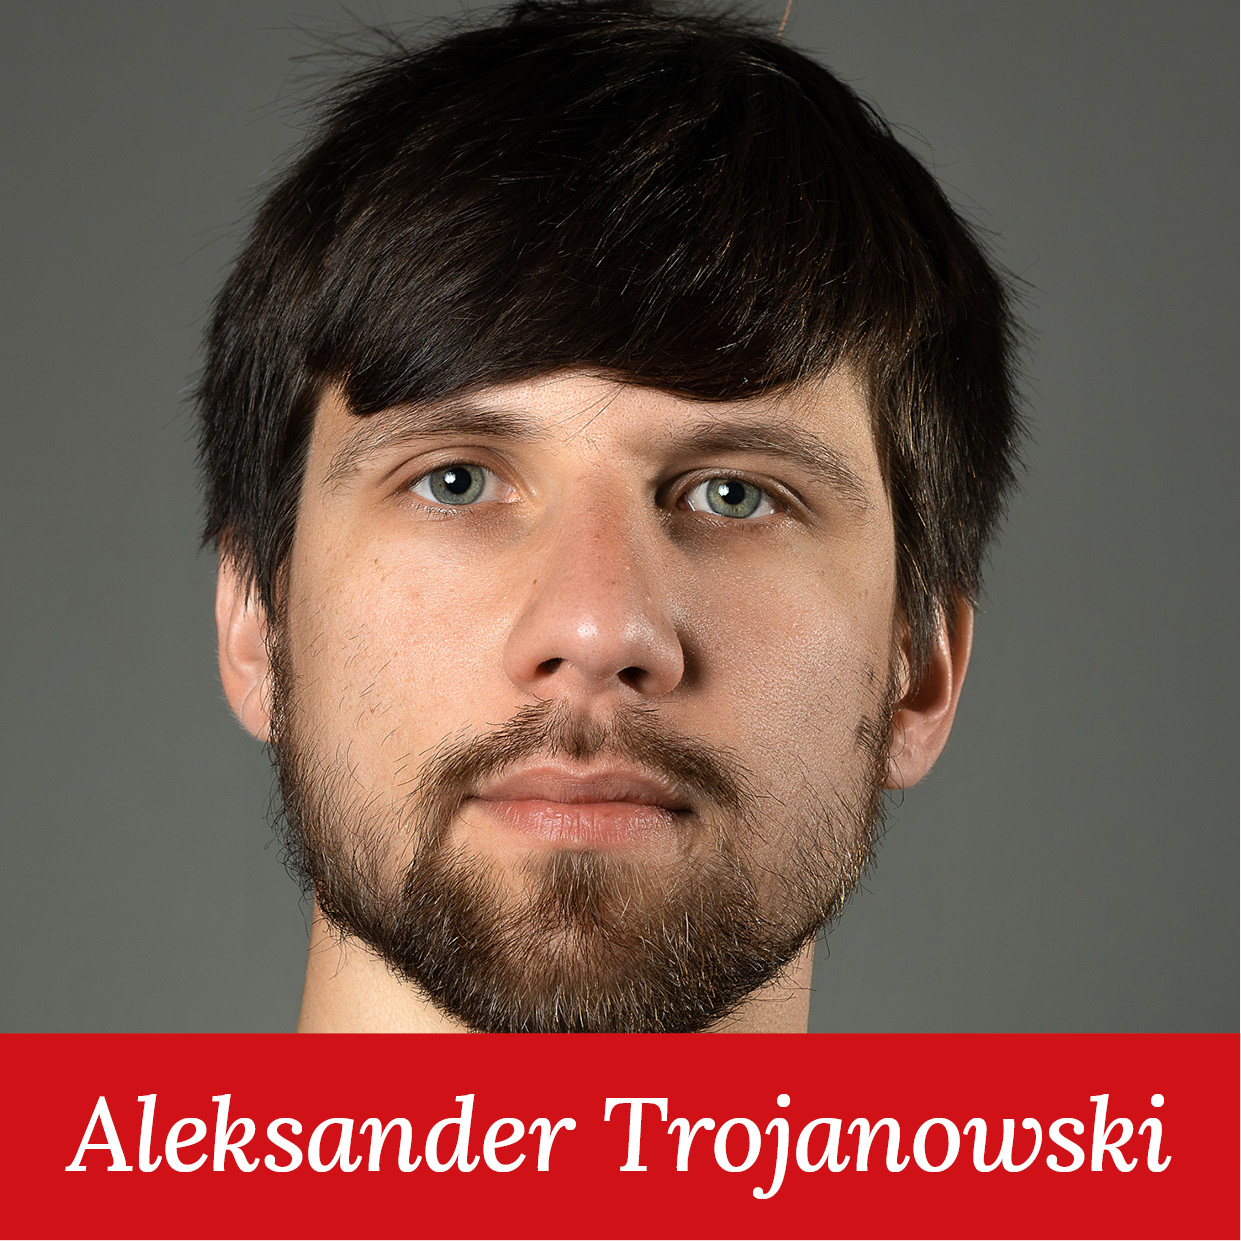 Aleksander Trojanowski